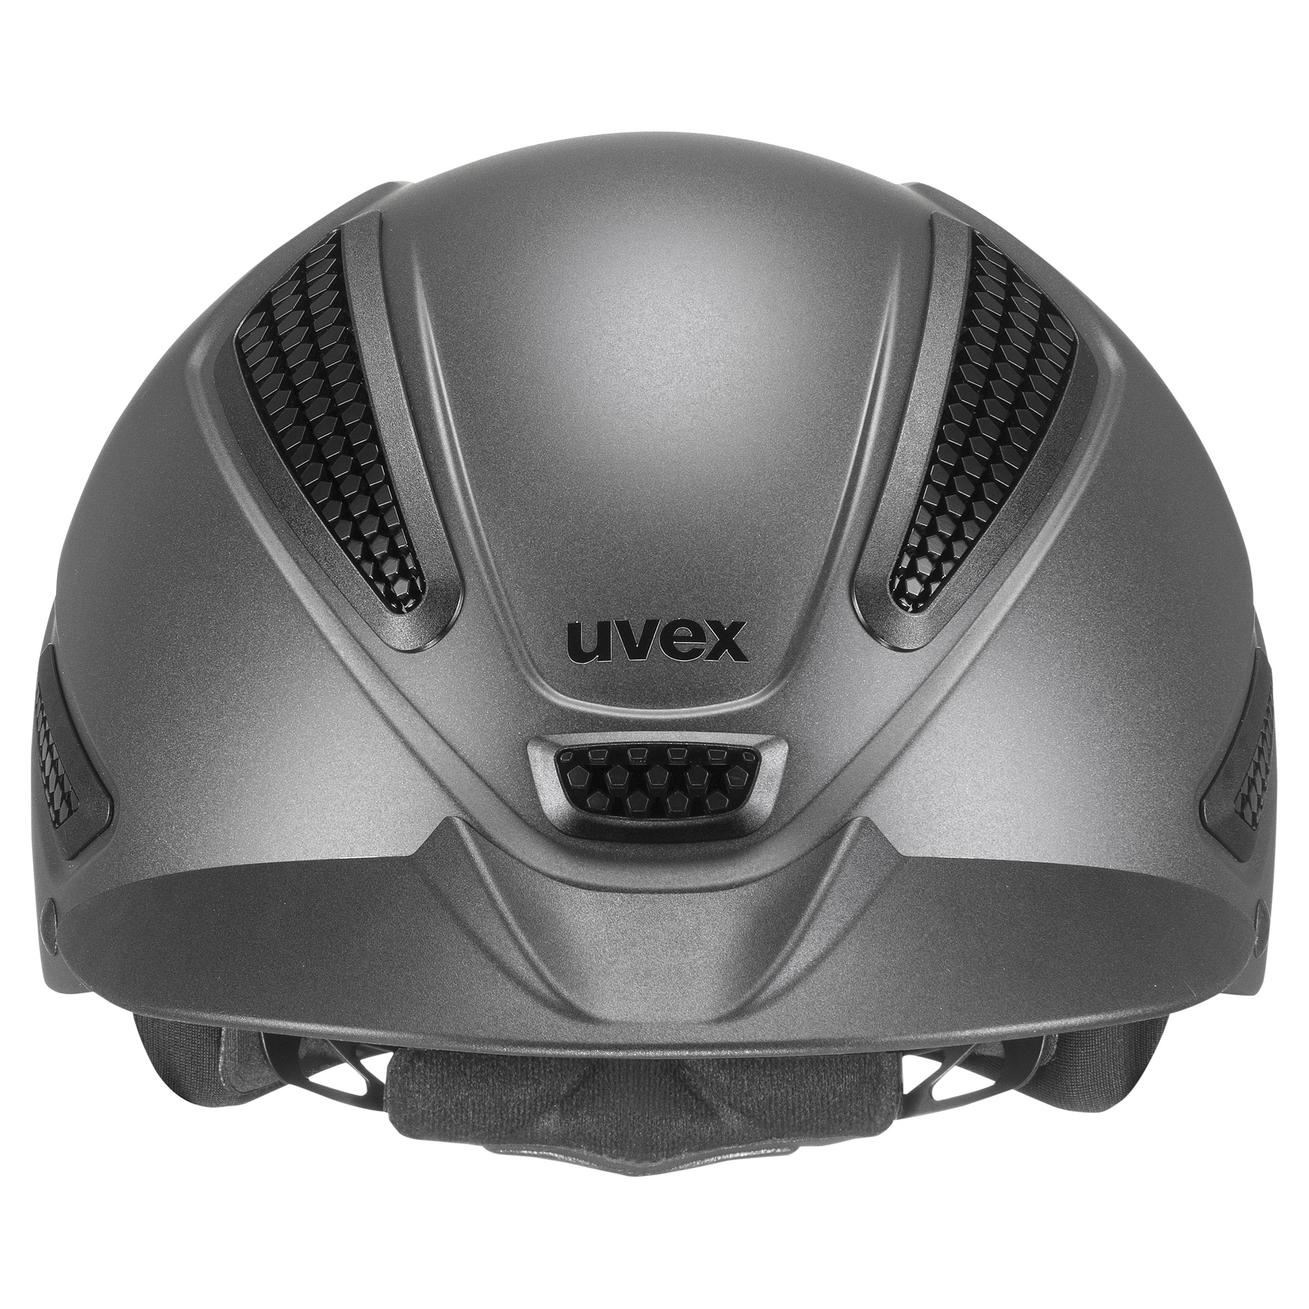 uvex perfexxion II Helmet - Anthracite Mat